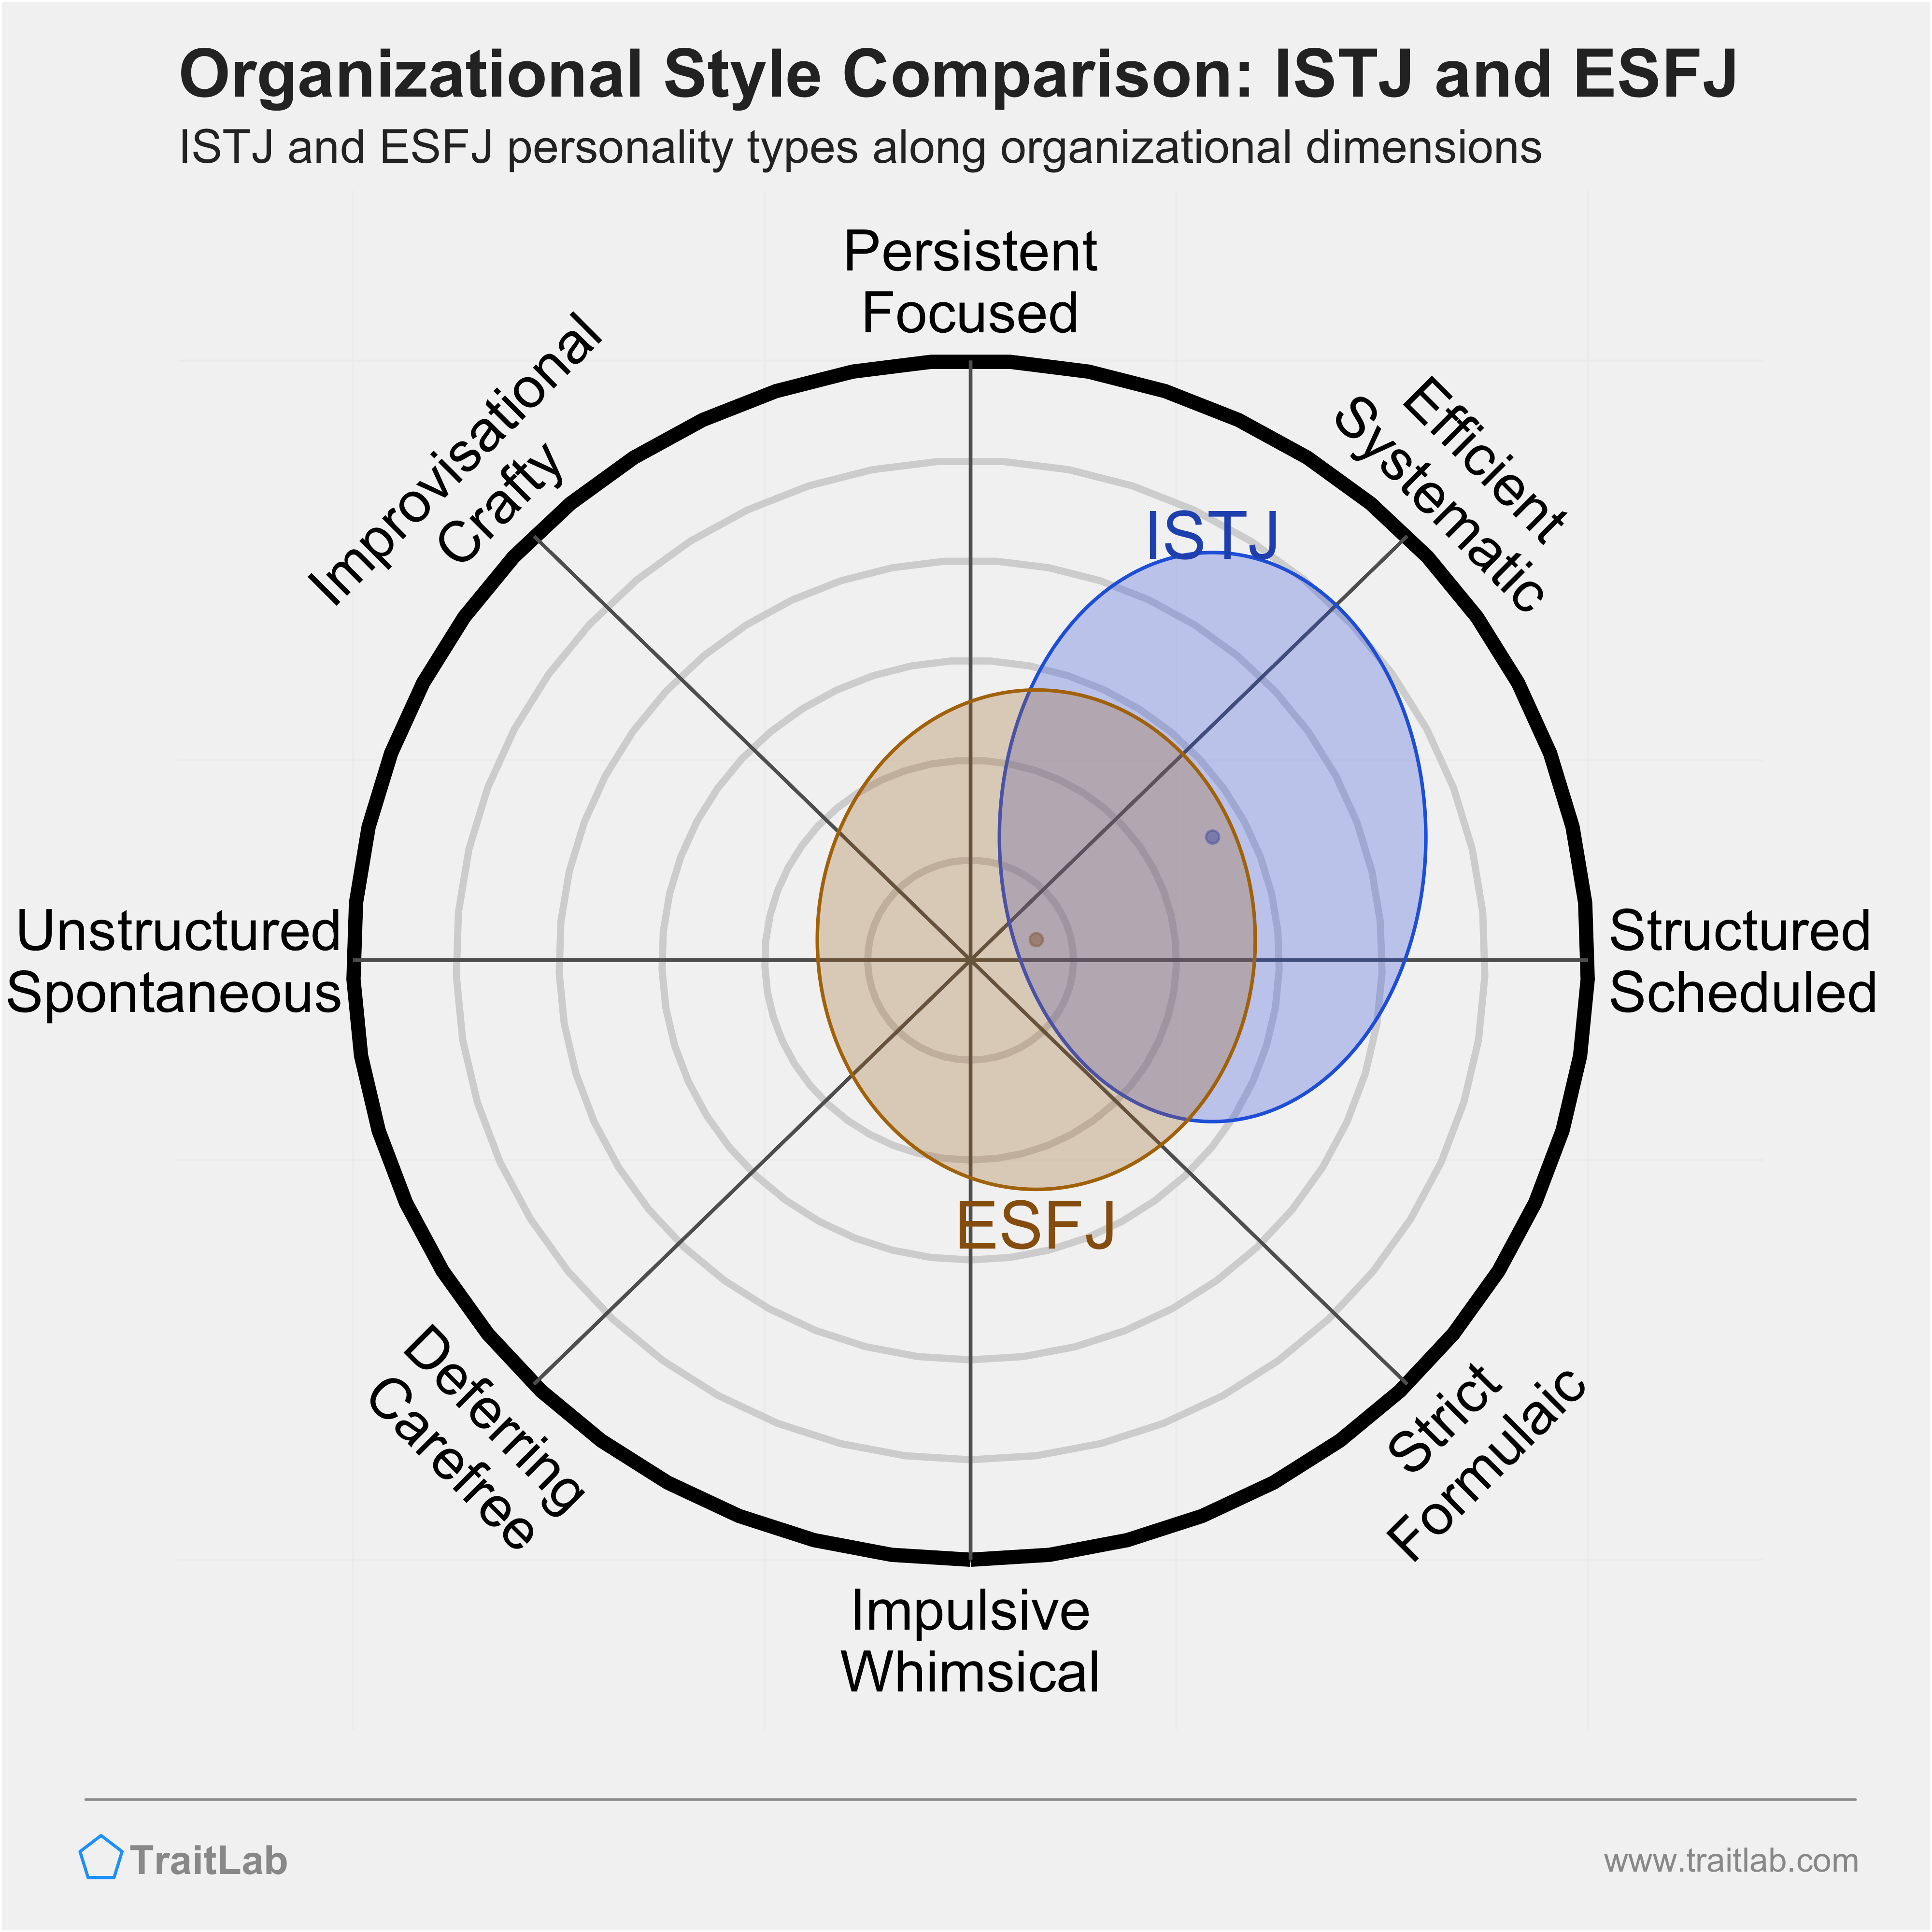 ISTJ and ESFJ comparison across organizational dimensions